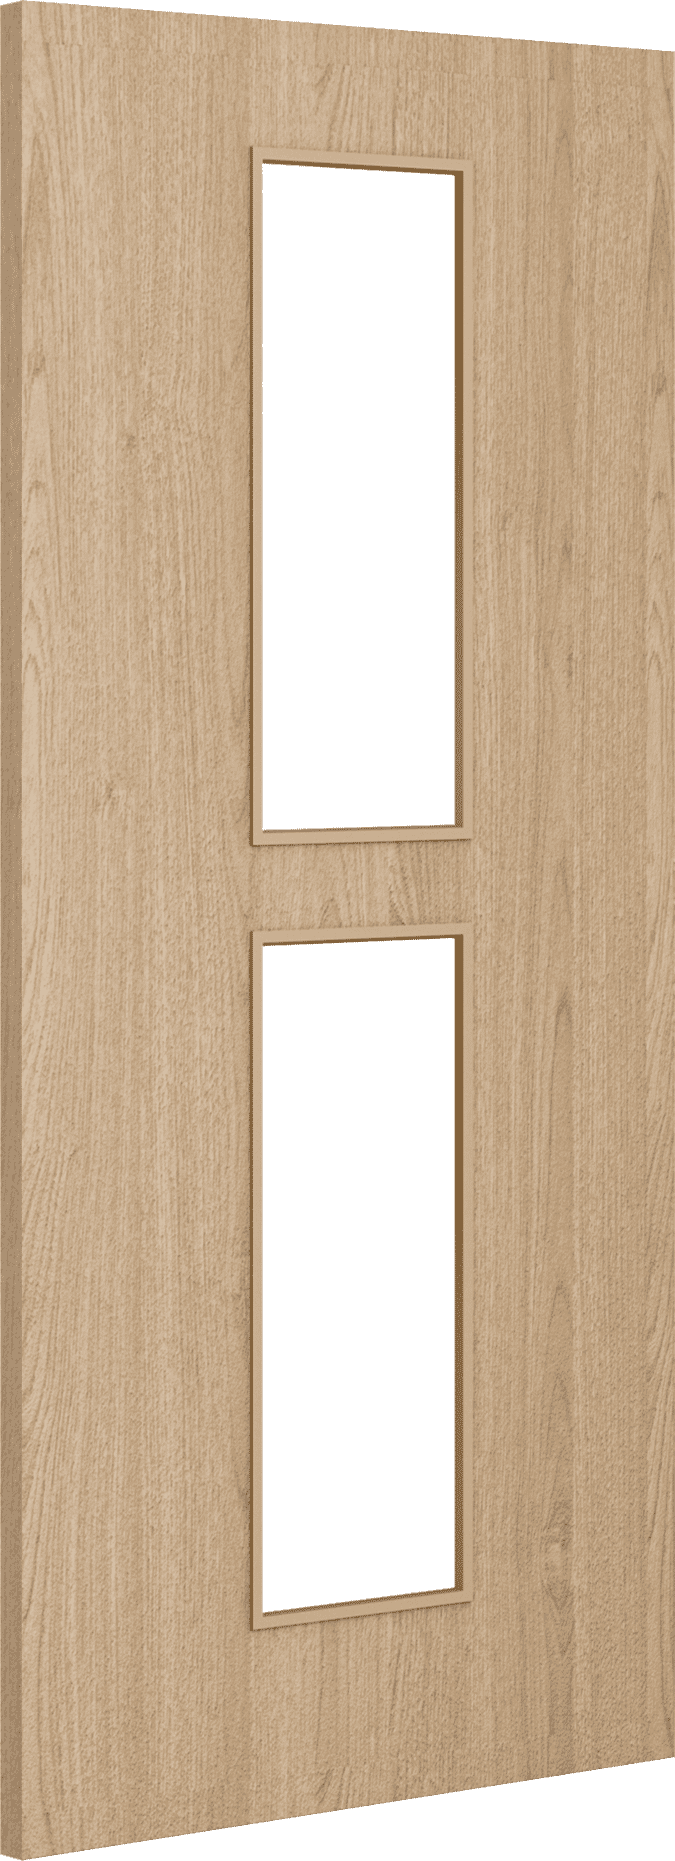 2040mm x 826mm x 44mm Architectural Oak 12 Frosted Glazed - Prefinished FD30 Fire Door Blank